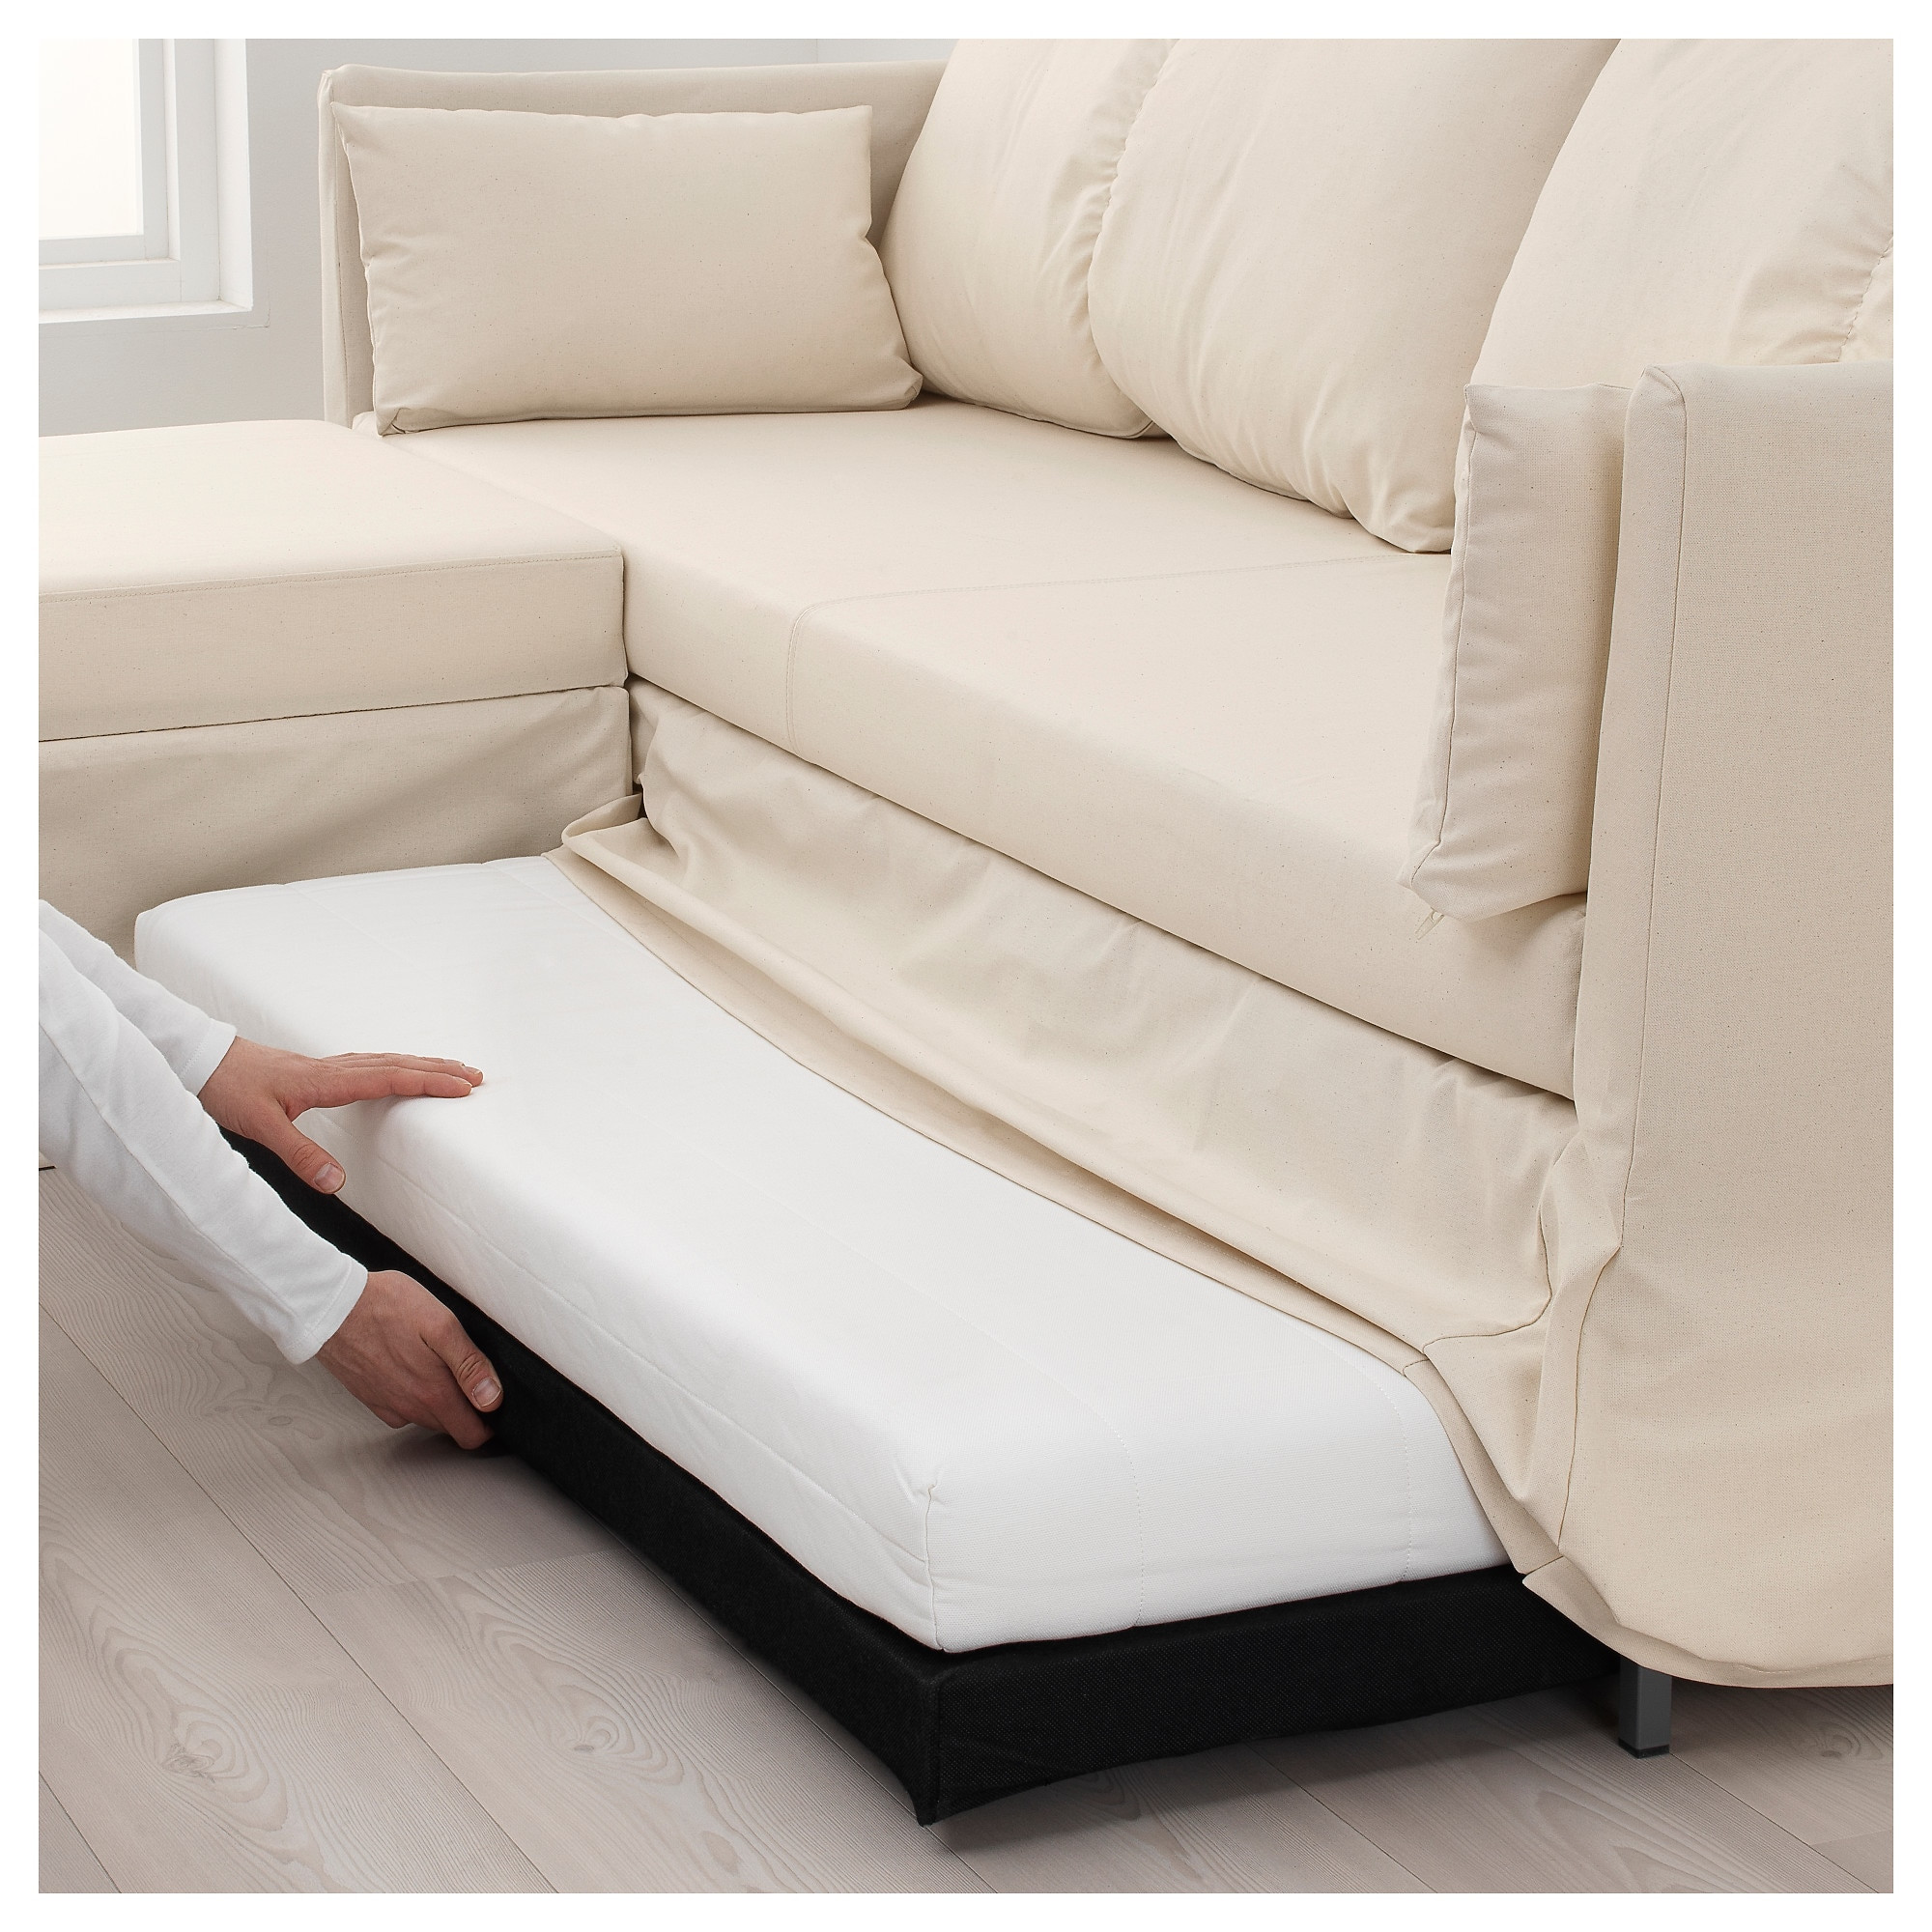 Best ideas about Ikea Sleeper Sofa
. Save or Pin SANDBACKEN Corner sofa bed Ransta natural IKEA Now.